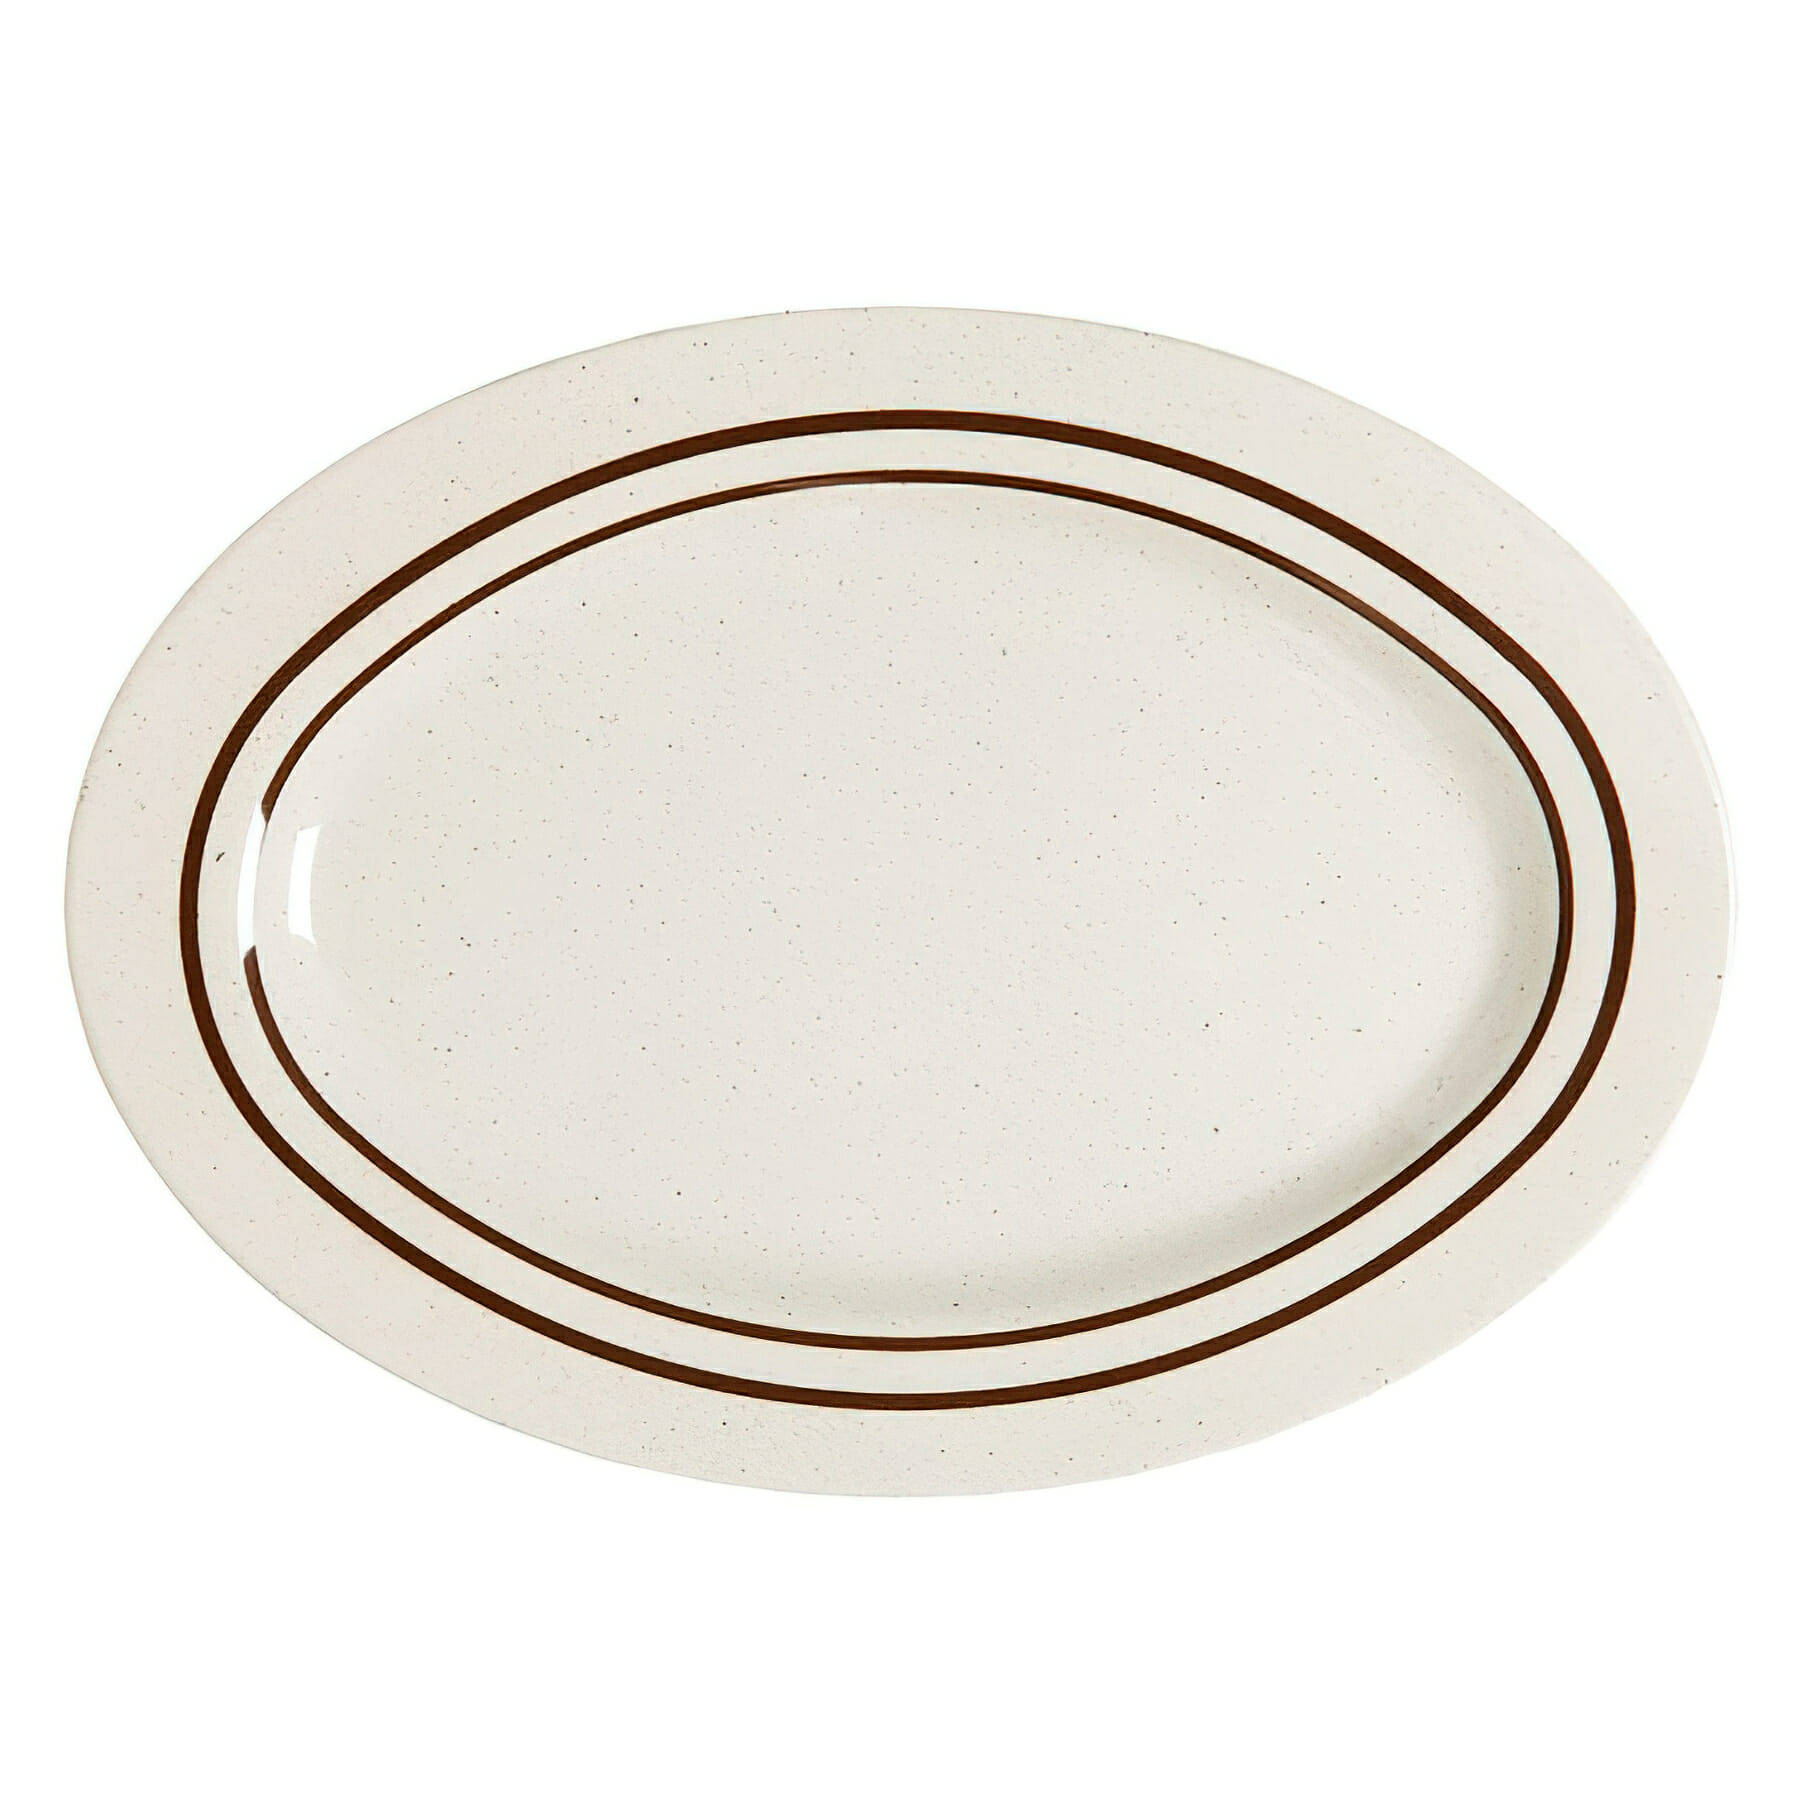 14" x 10" Oval Platter